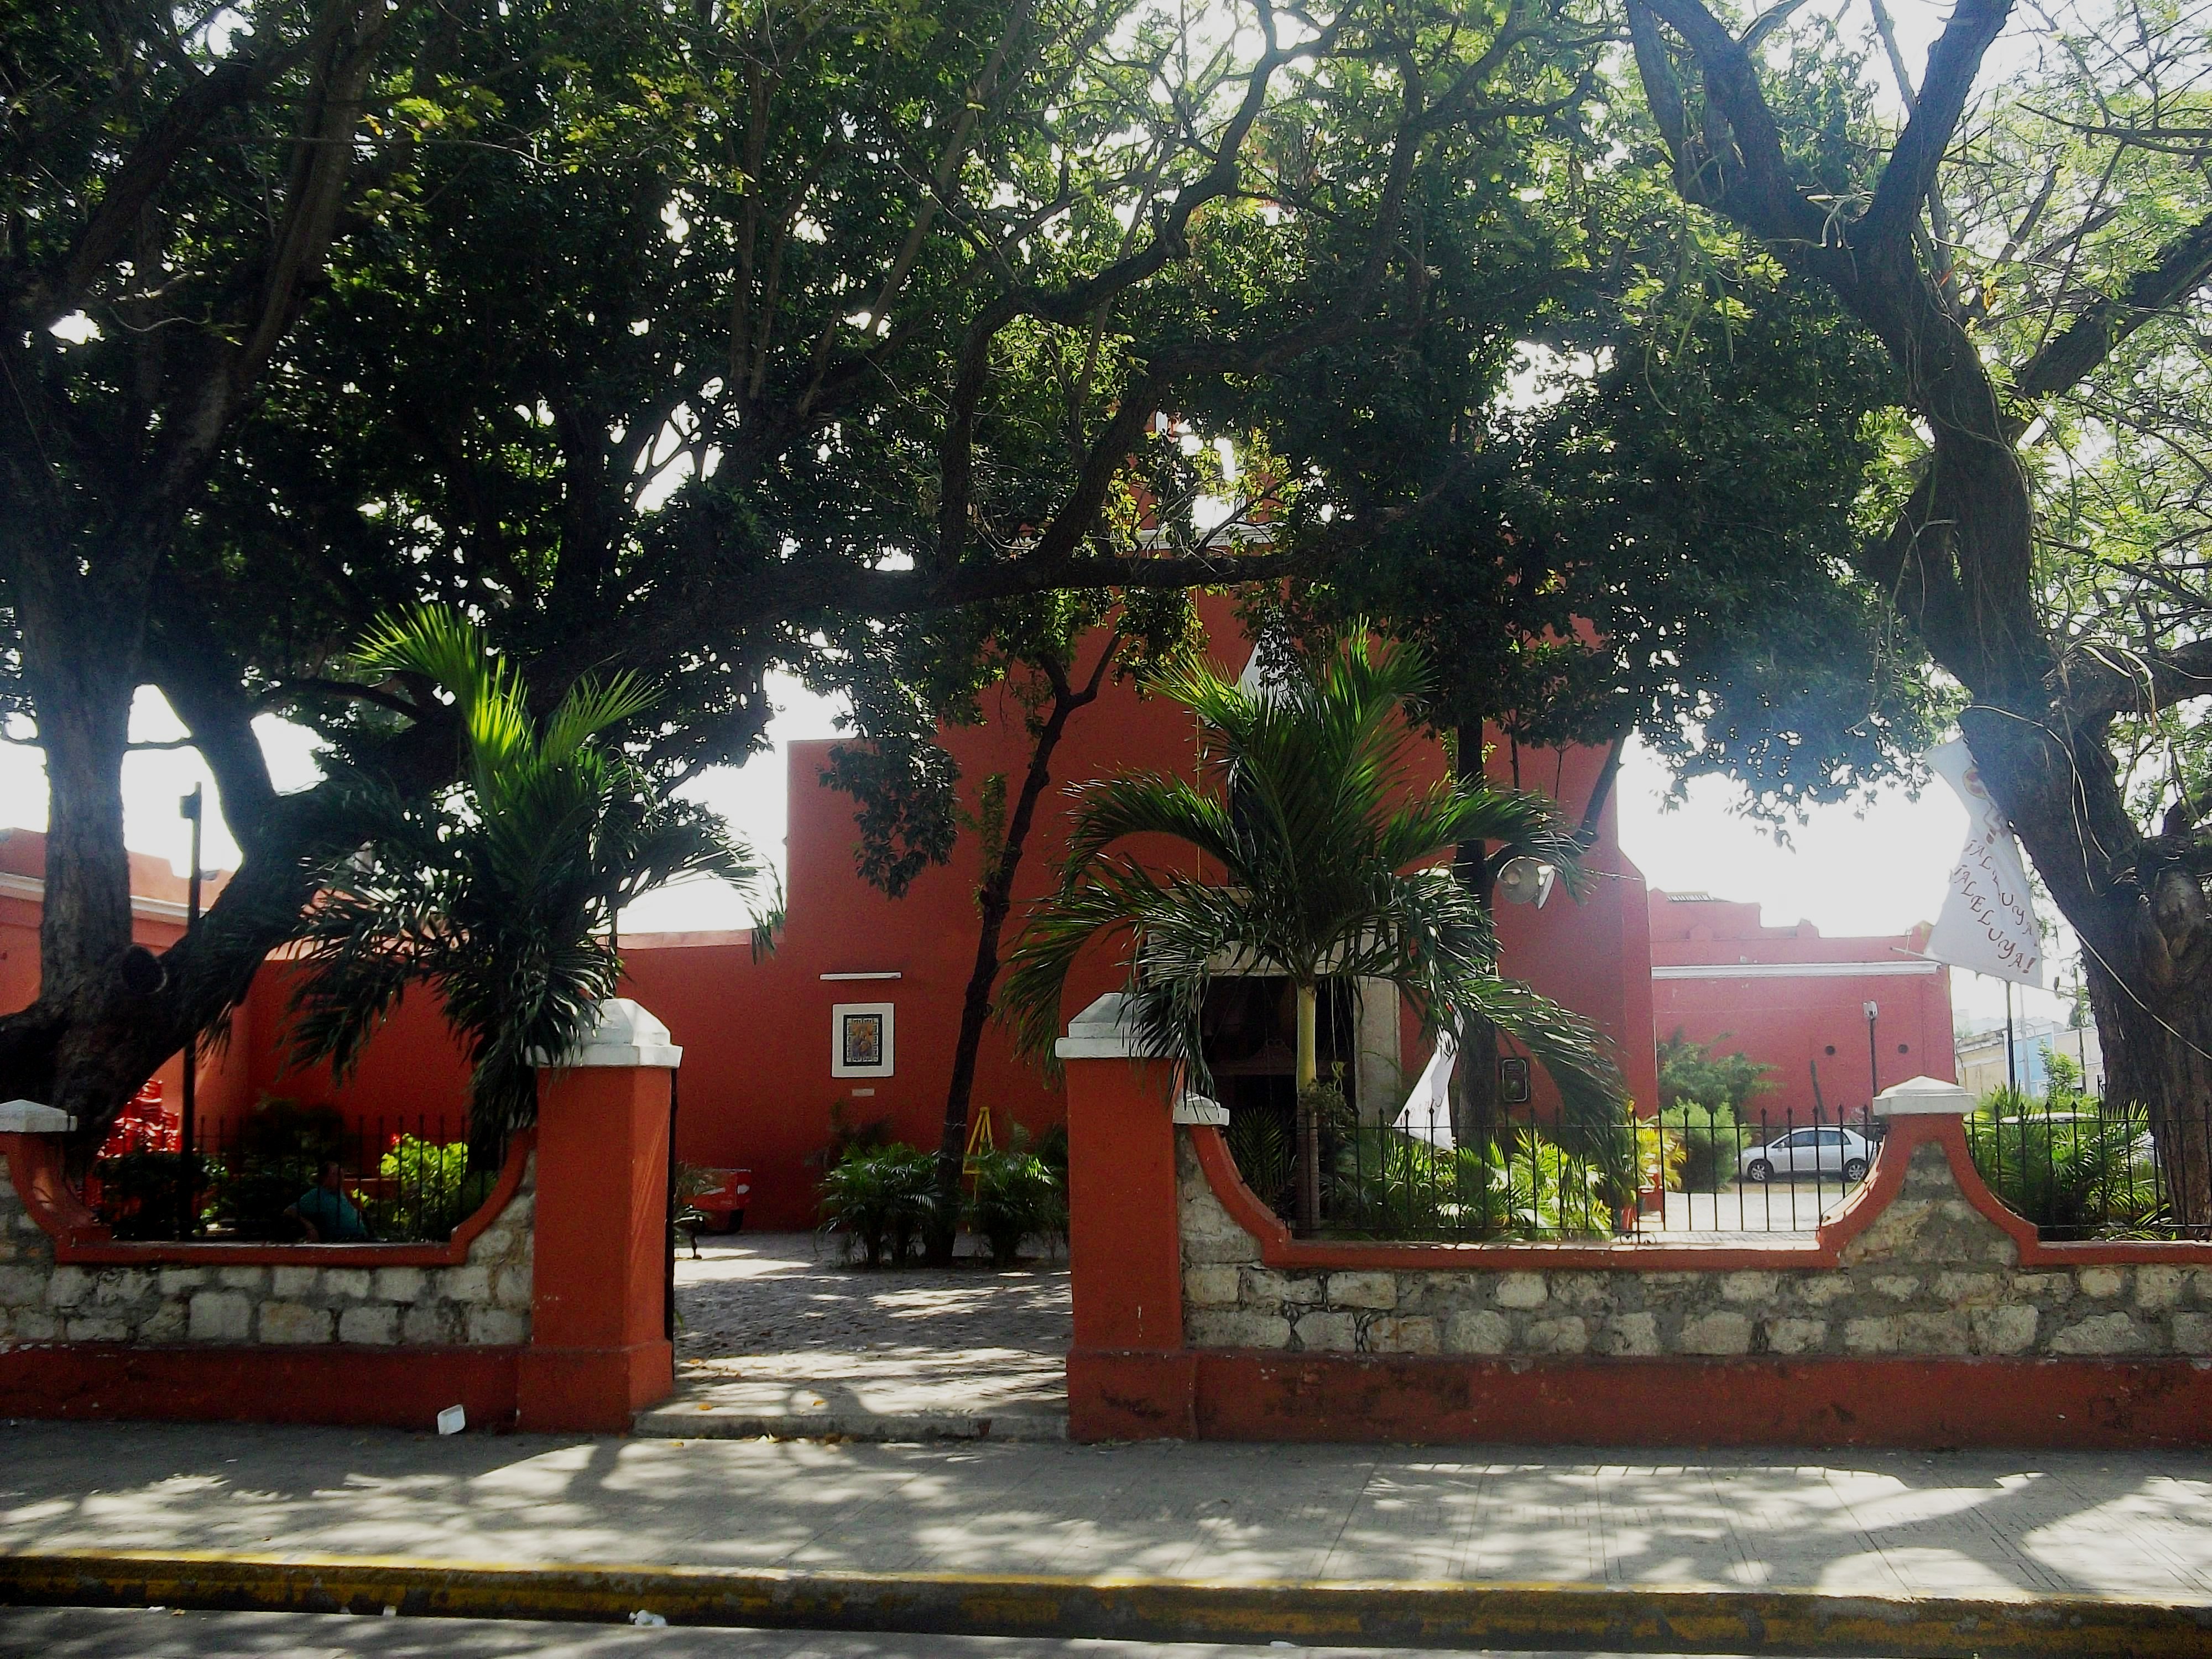 File:Iglesia de Santa Lucía, Mérida, Yucatán (01).jpg - Wikimedia Commons